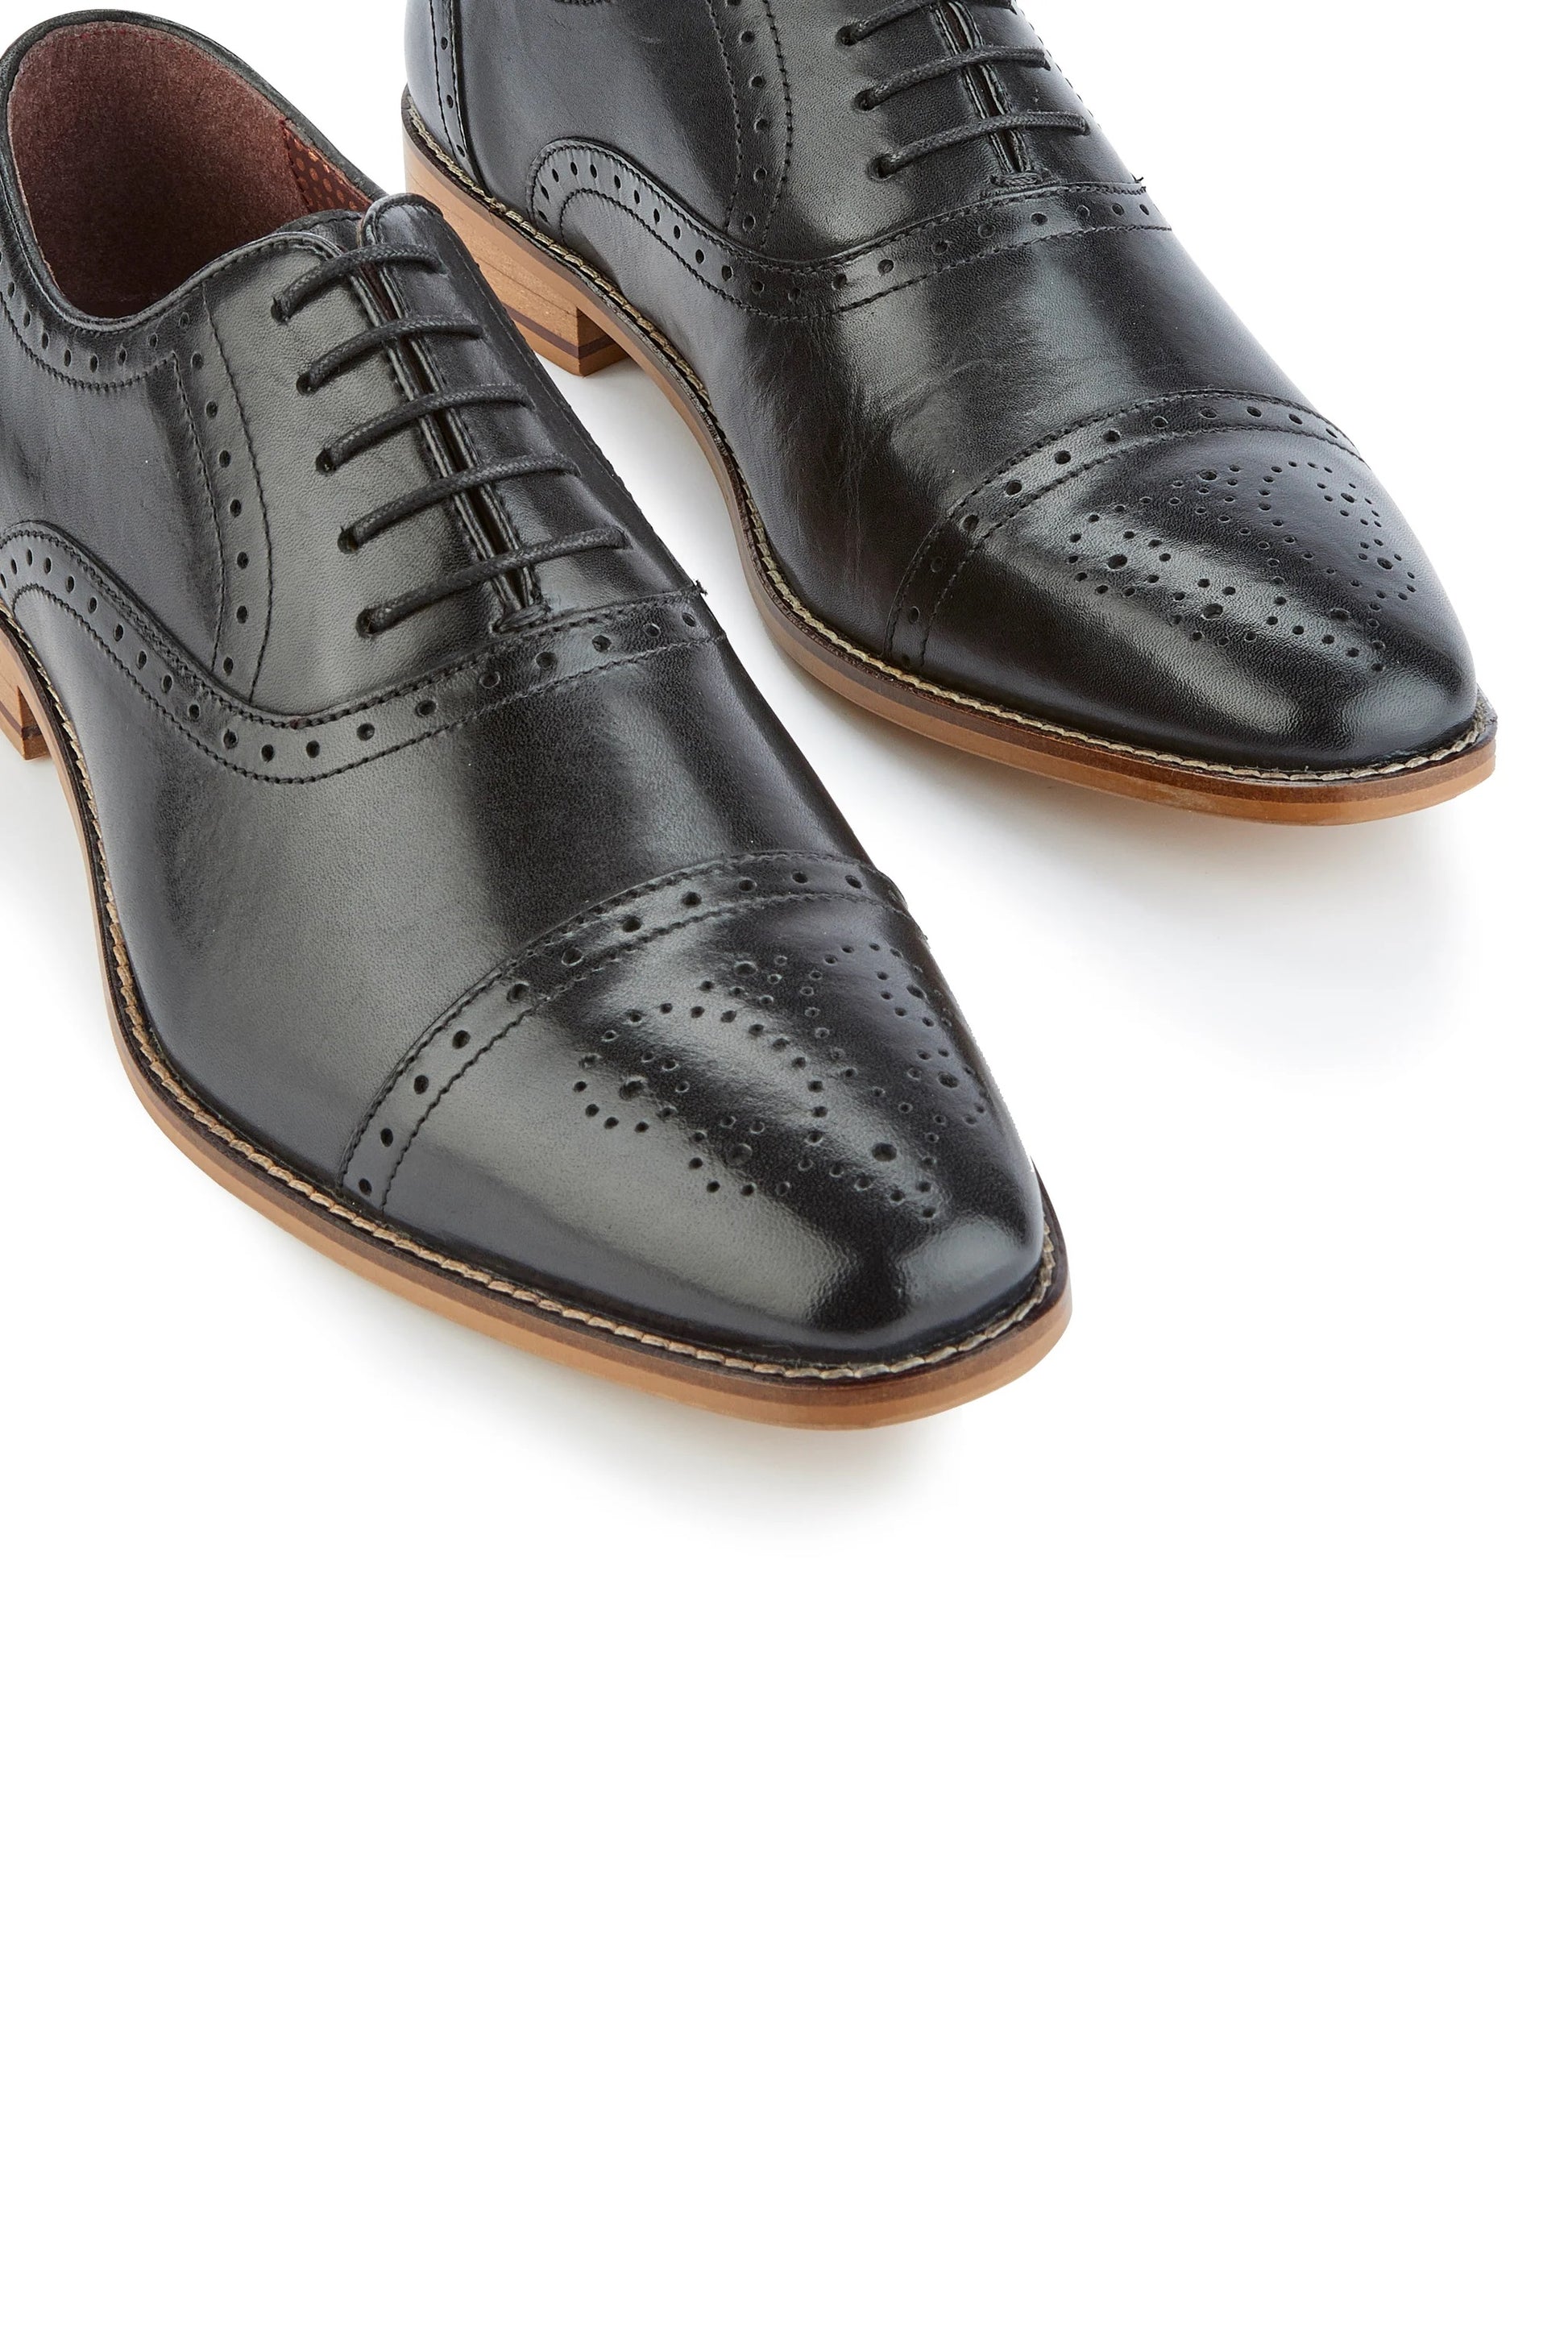 London Brogues Arthur Black Leather Brogue Shoes